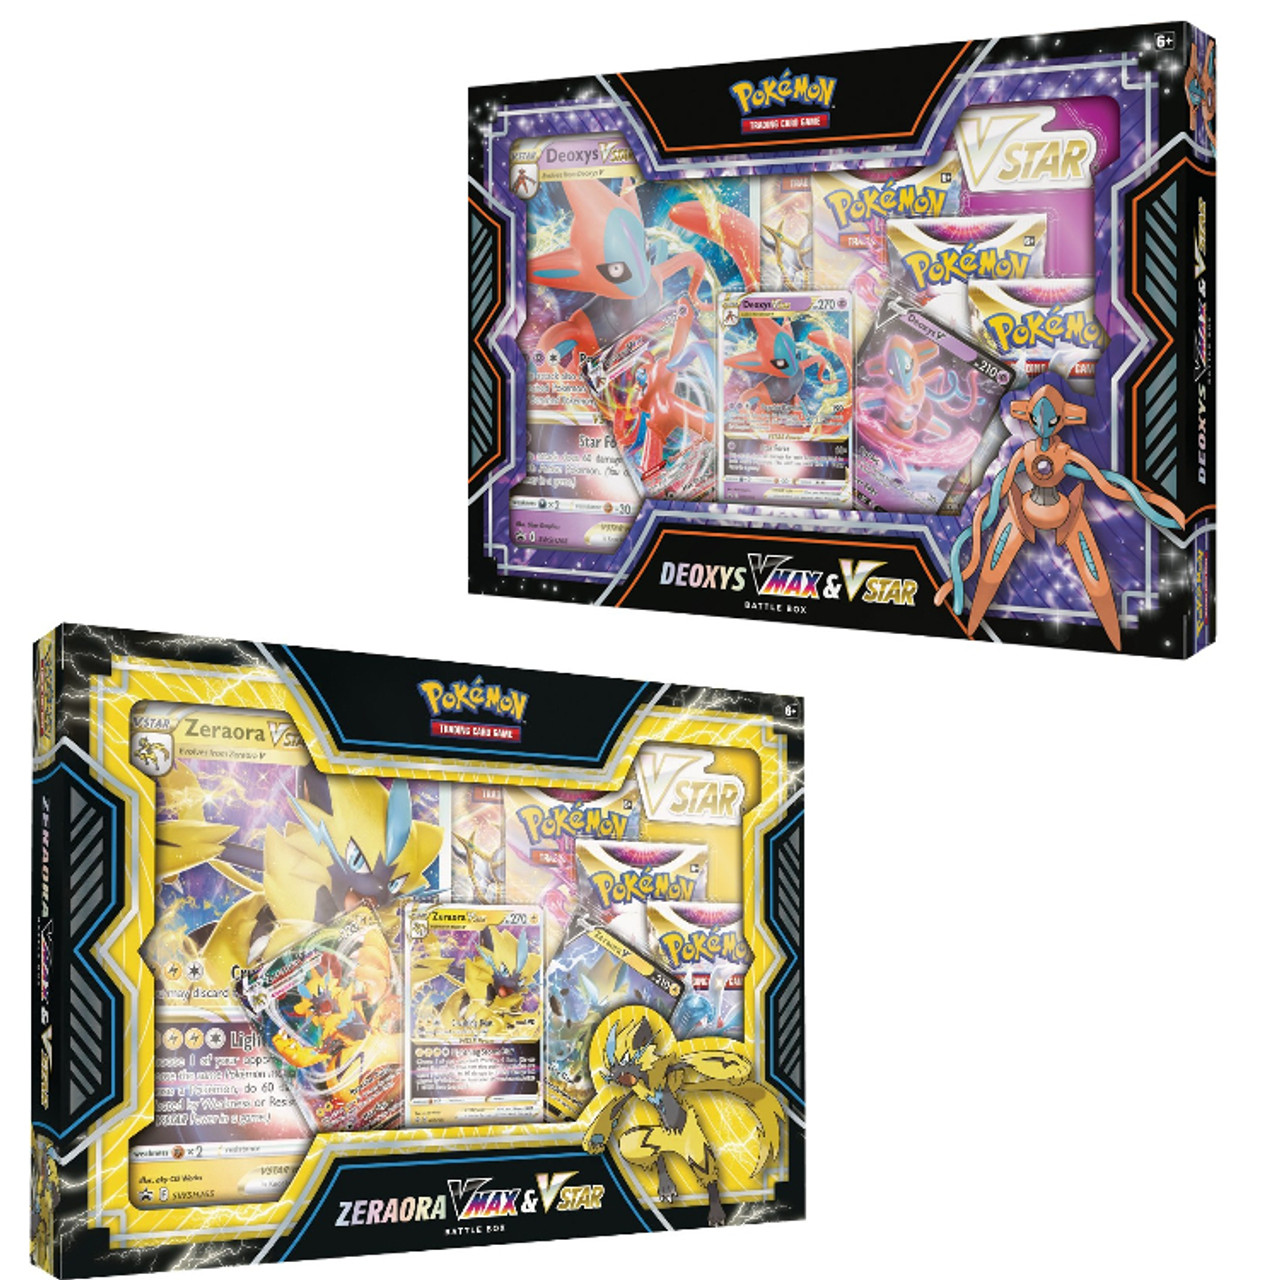 Pokemon Zeraora / Deoxys VMAX & VSTAR Battle Box (1st)